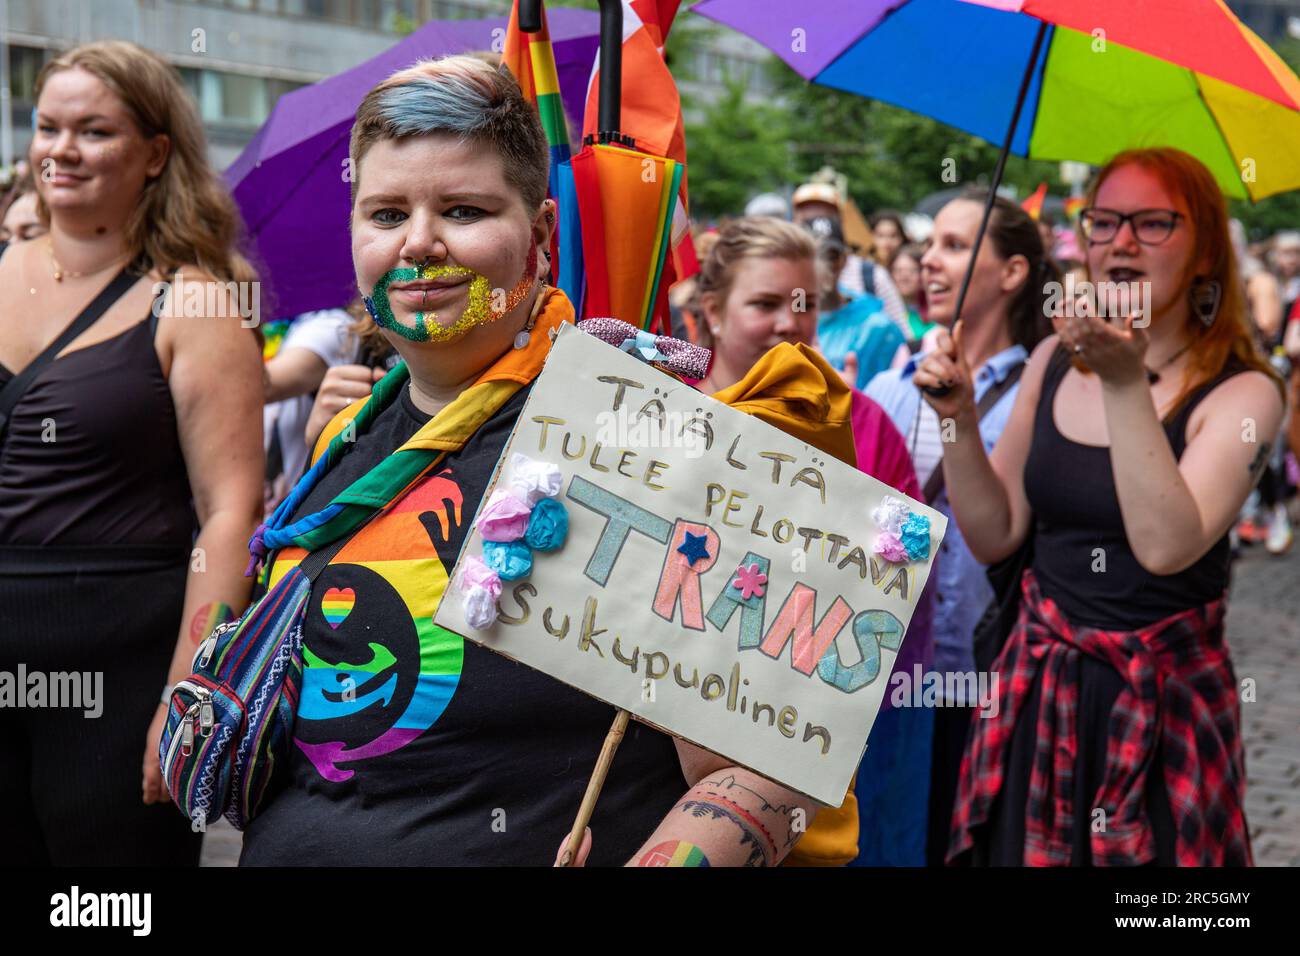 Tääluti tulee pelottava transsukupuolinen. Teilnehmer mit einem selbst gemachten Schild bei der Helsinki Pride 2023 Parade in Helsinki, Finnland. Stockfoto